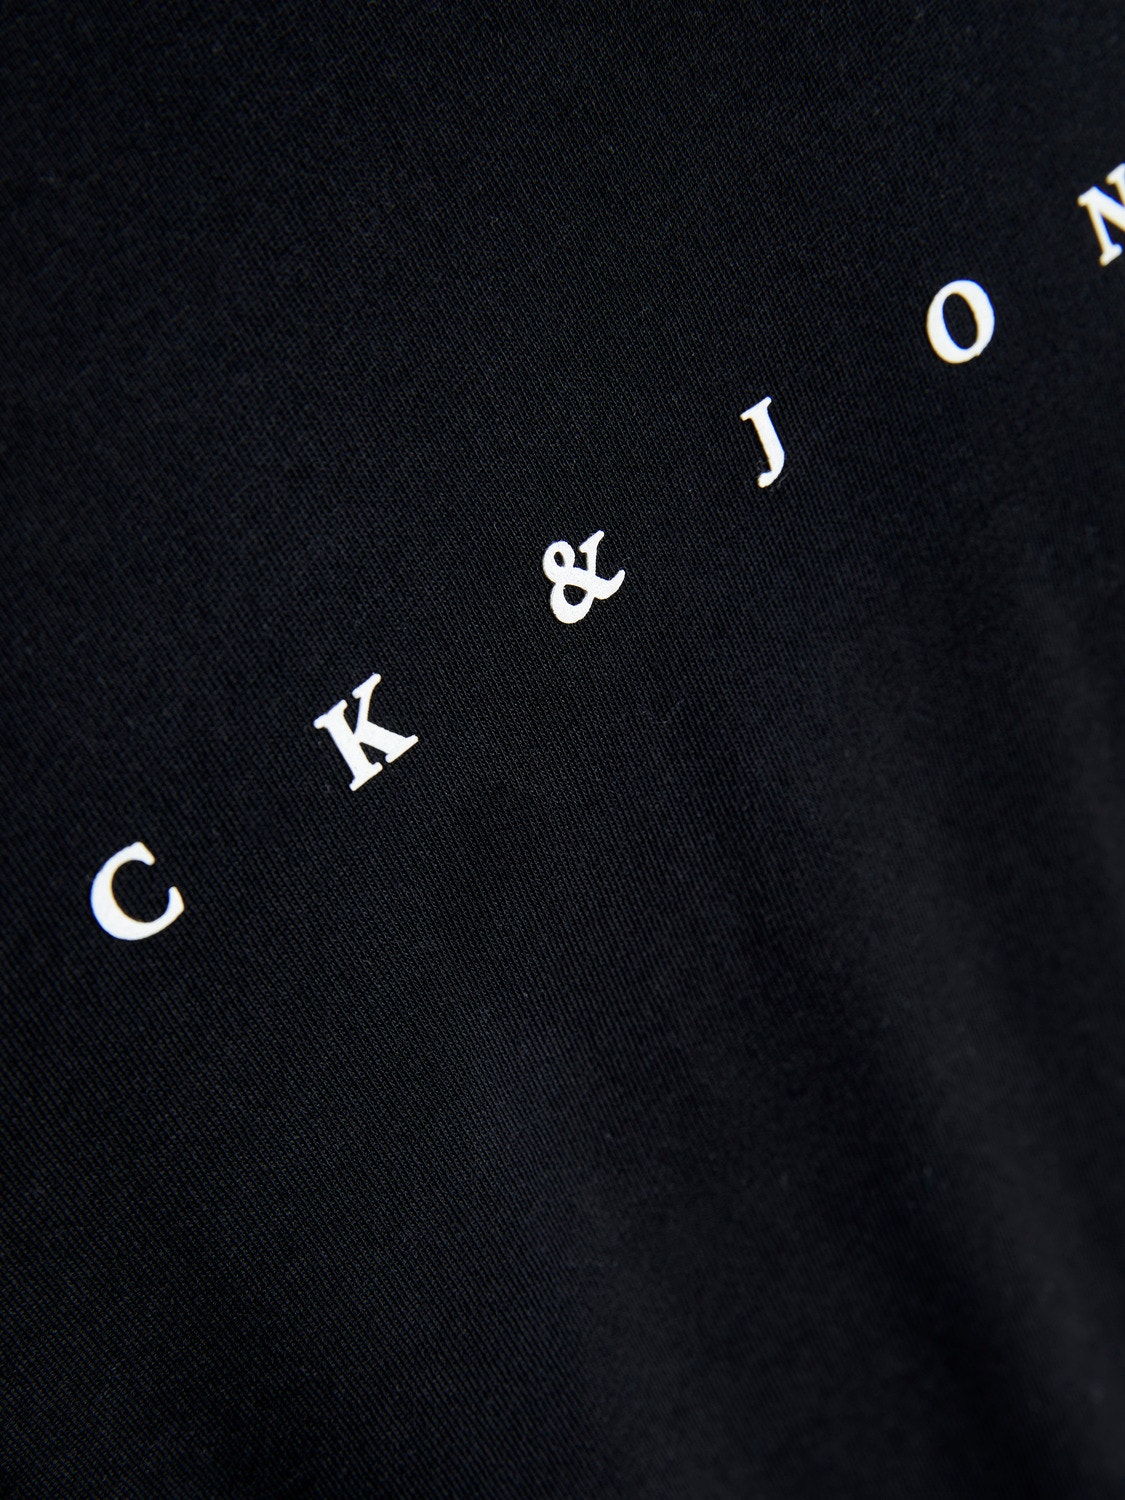 jack and jones t-shirt 12186330vr - GT Sport